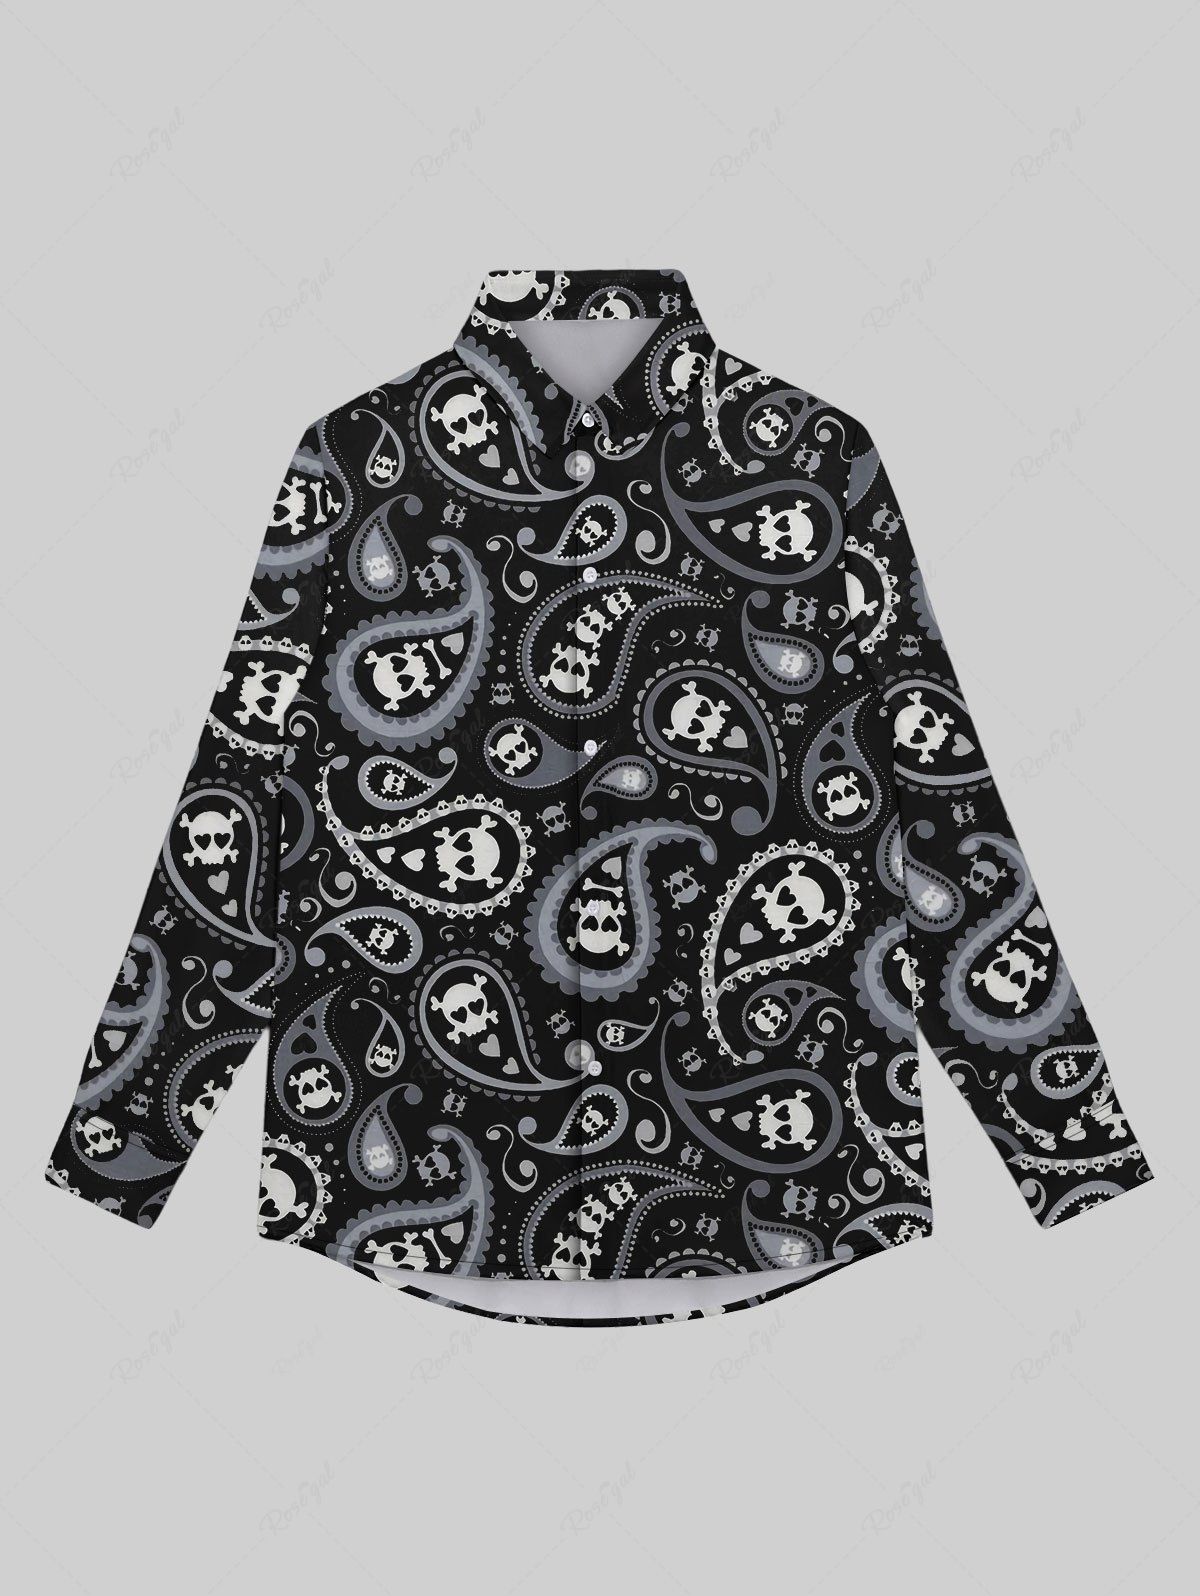 Chic Gothic Turn-down Collar Paisley Skulls Heart Bone Print Buttons Shirt For Men  